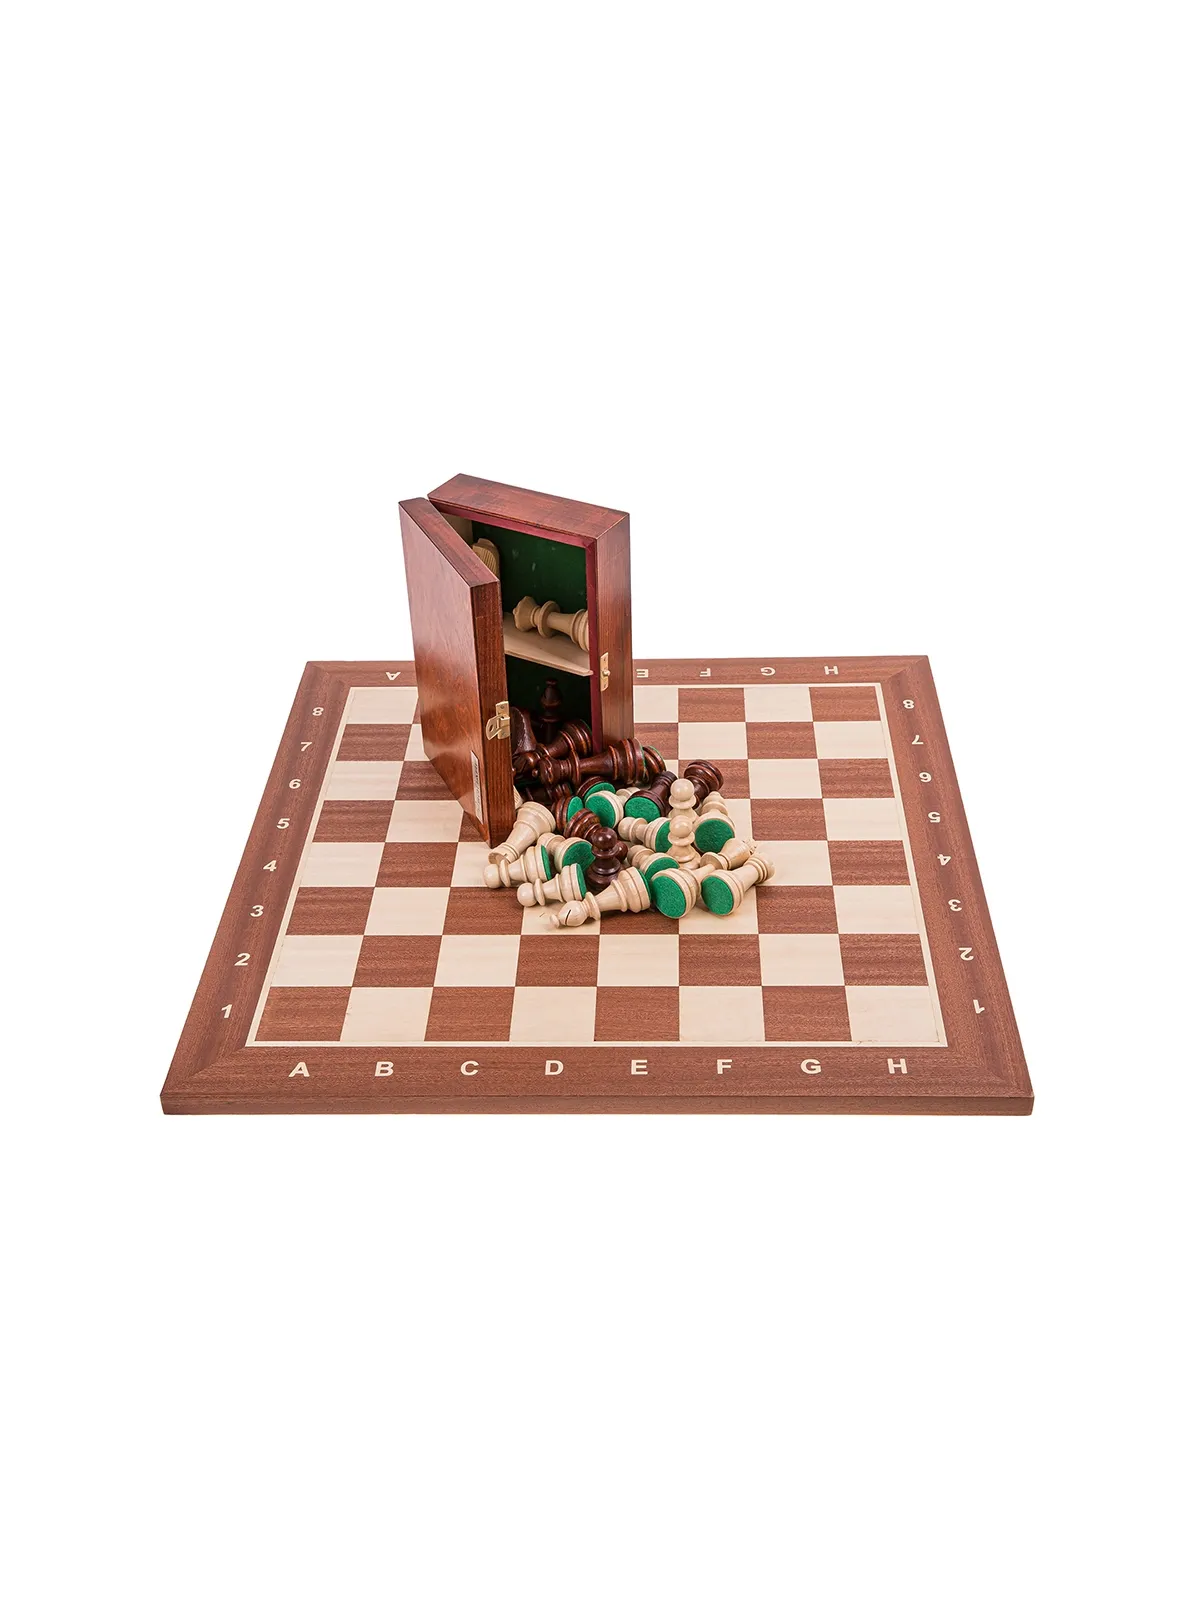 Profi Chess Set No 5 - Mahogany